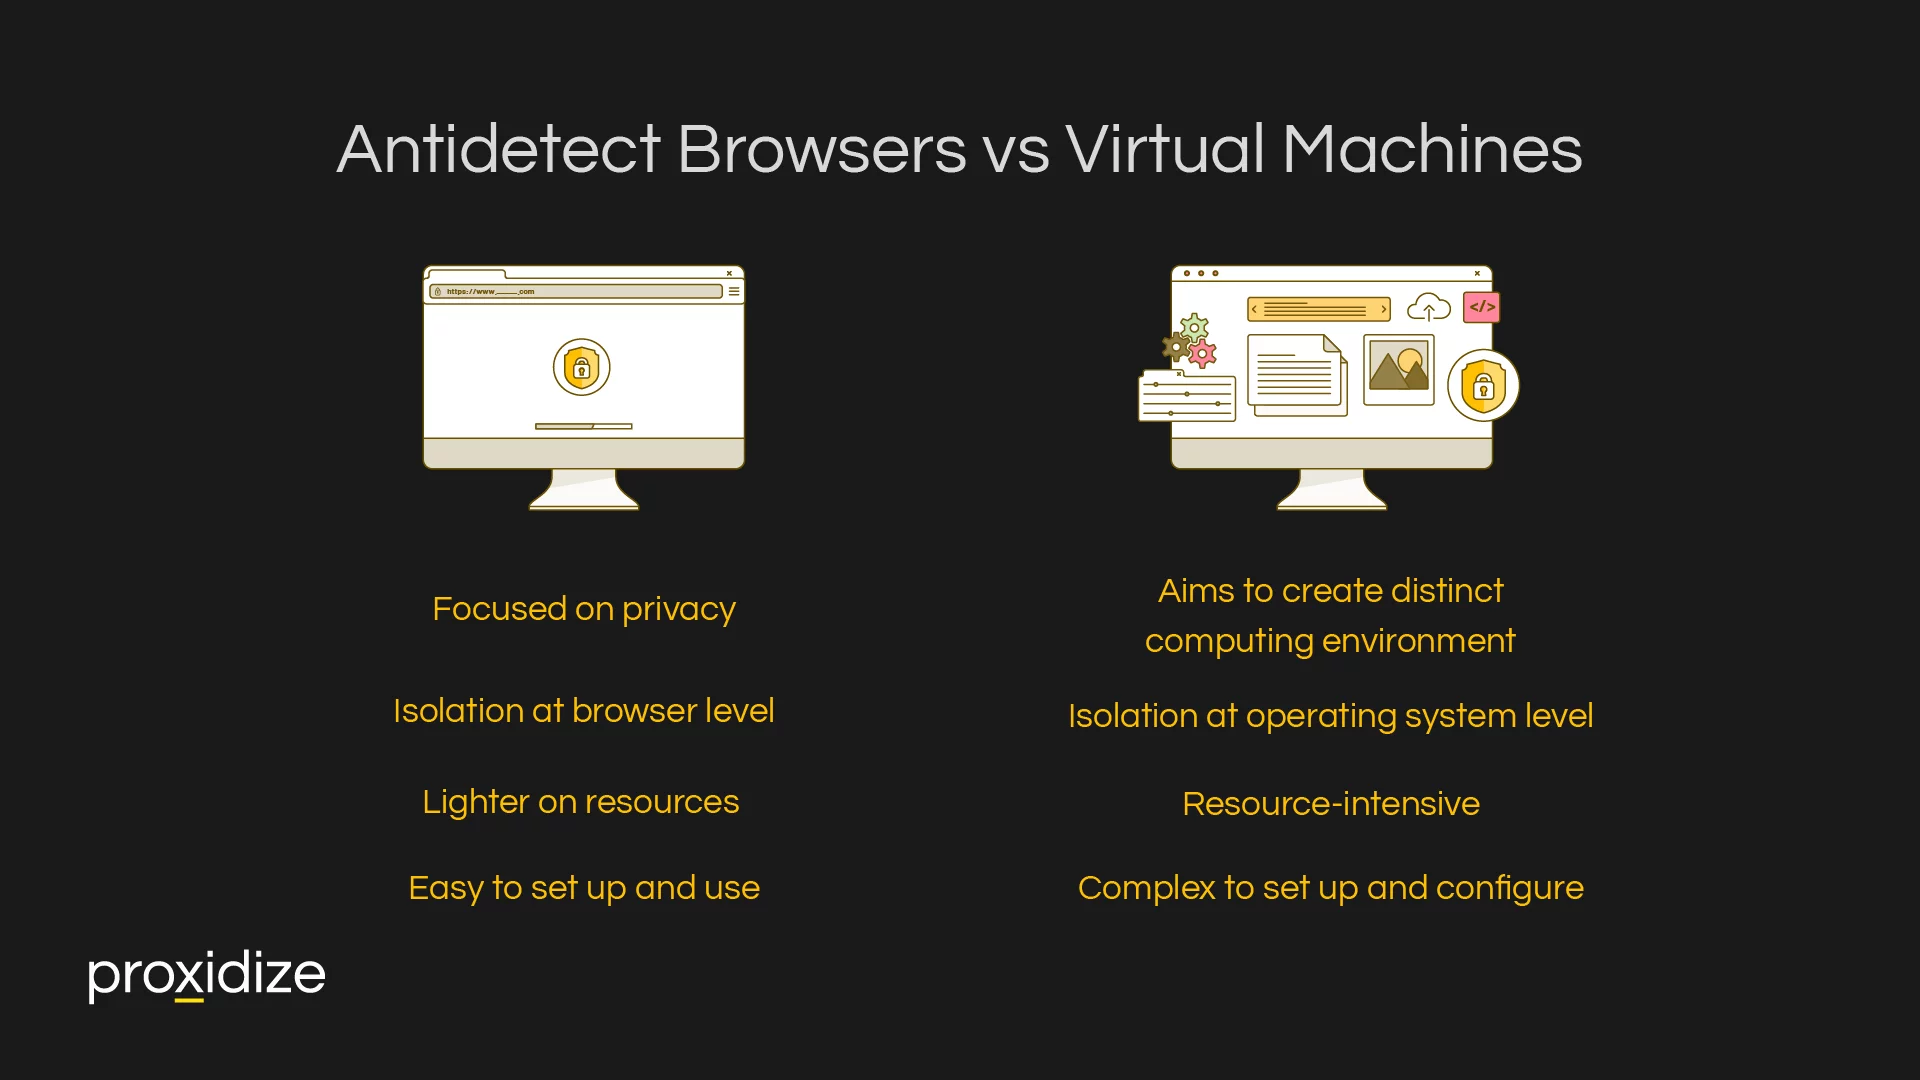 Antidetect Browsers vs Virtual Machines